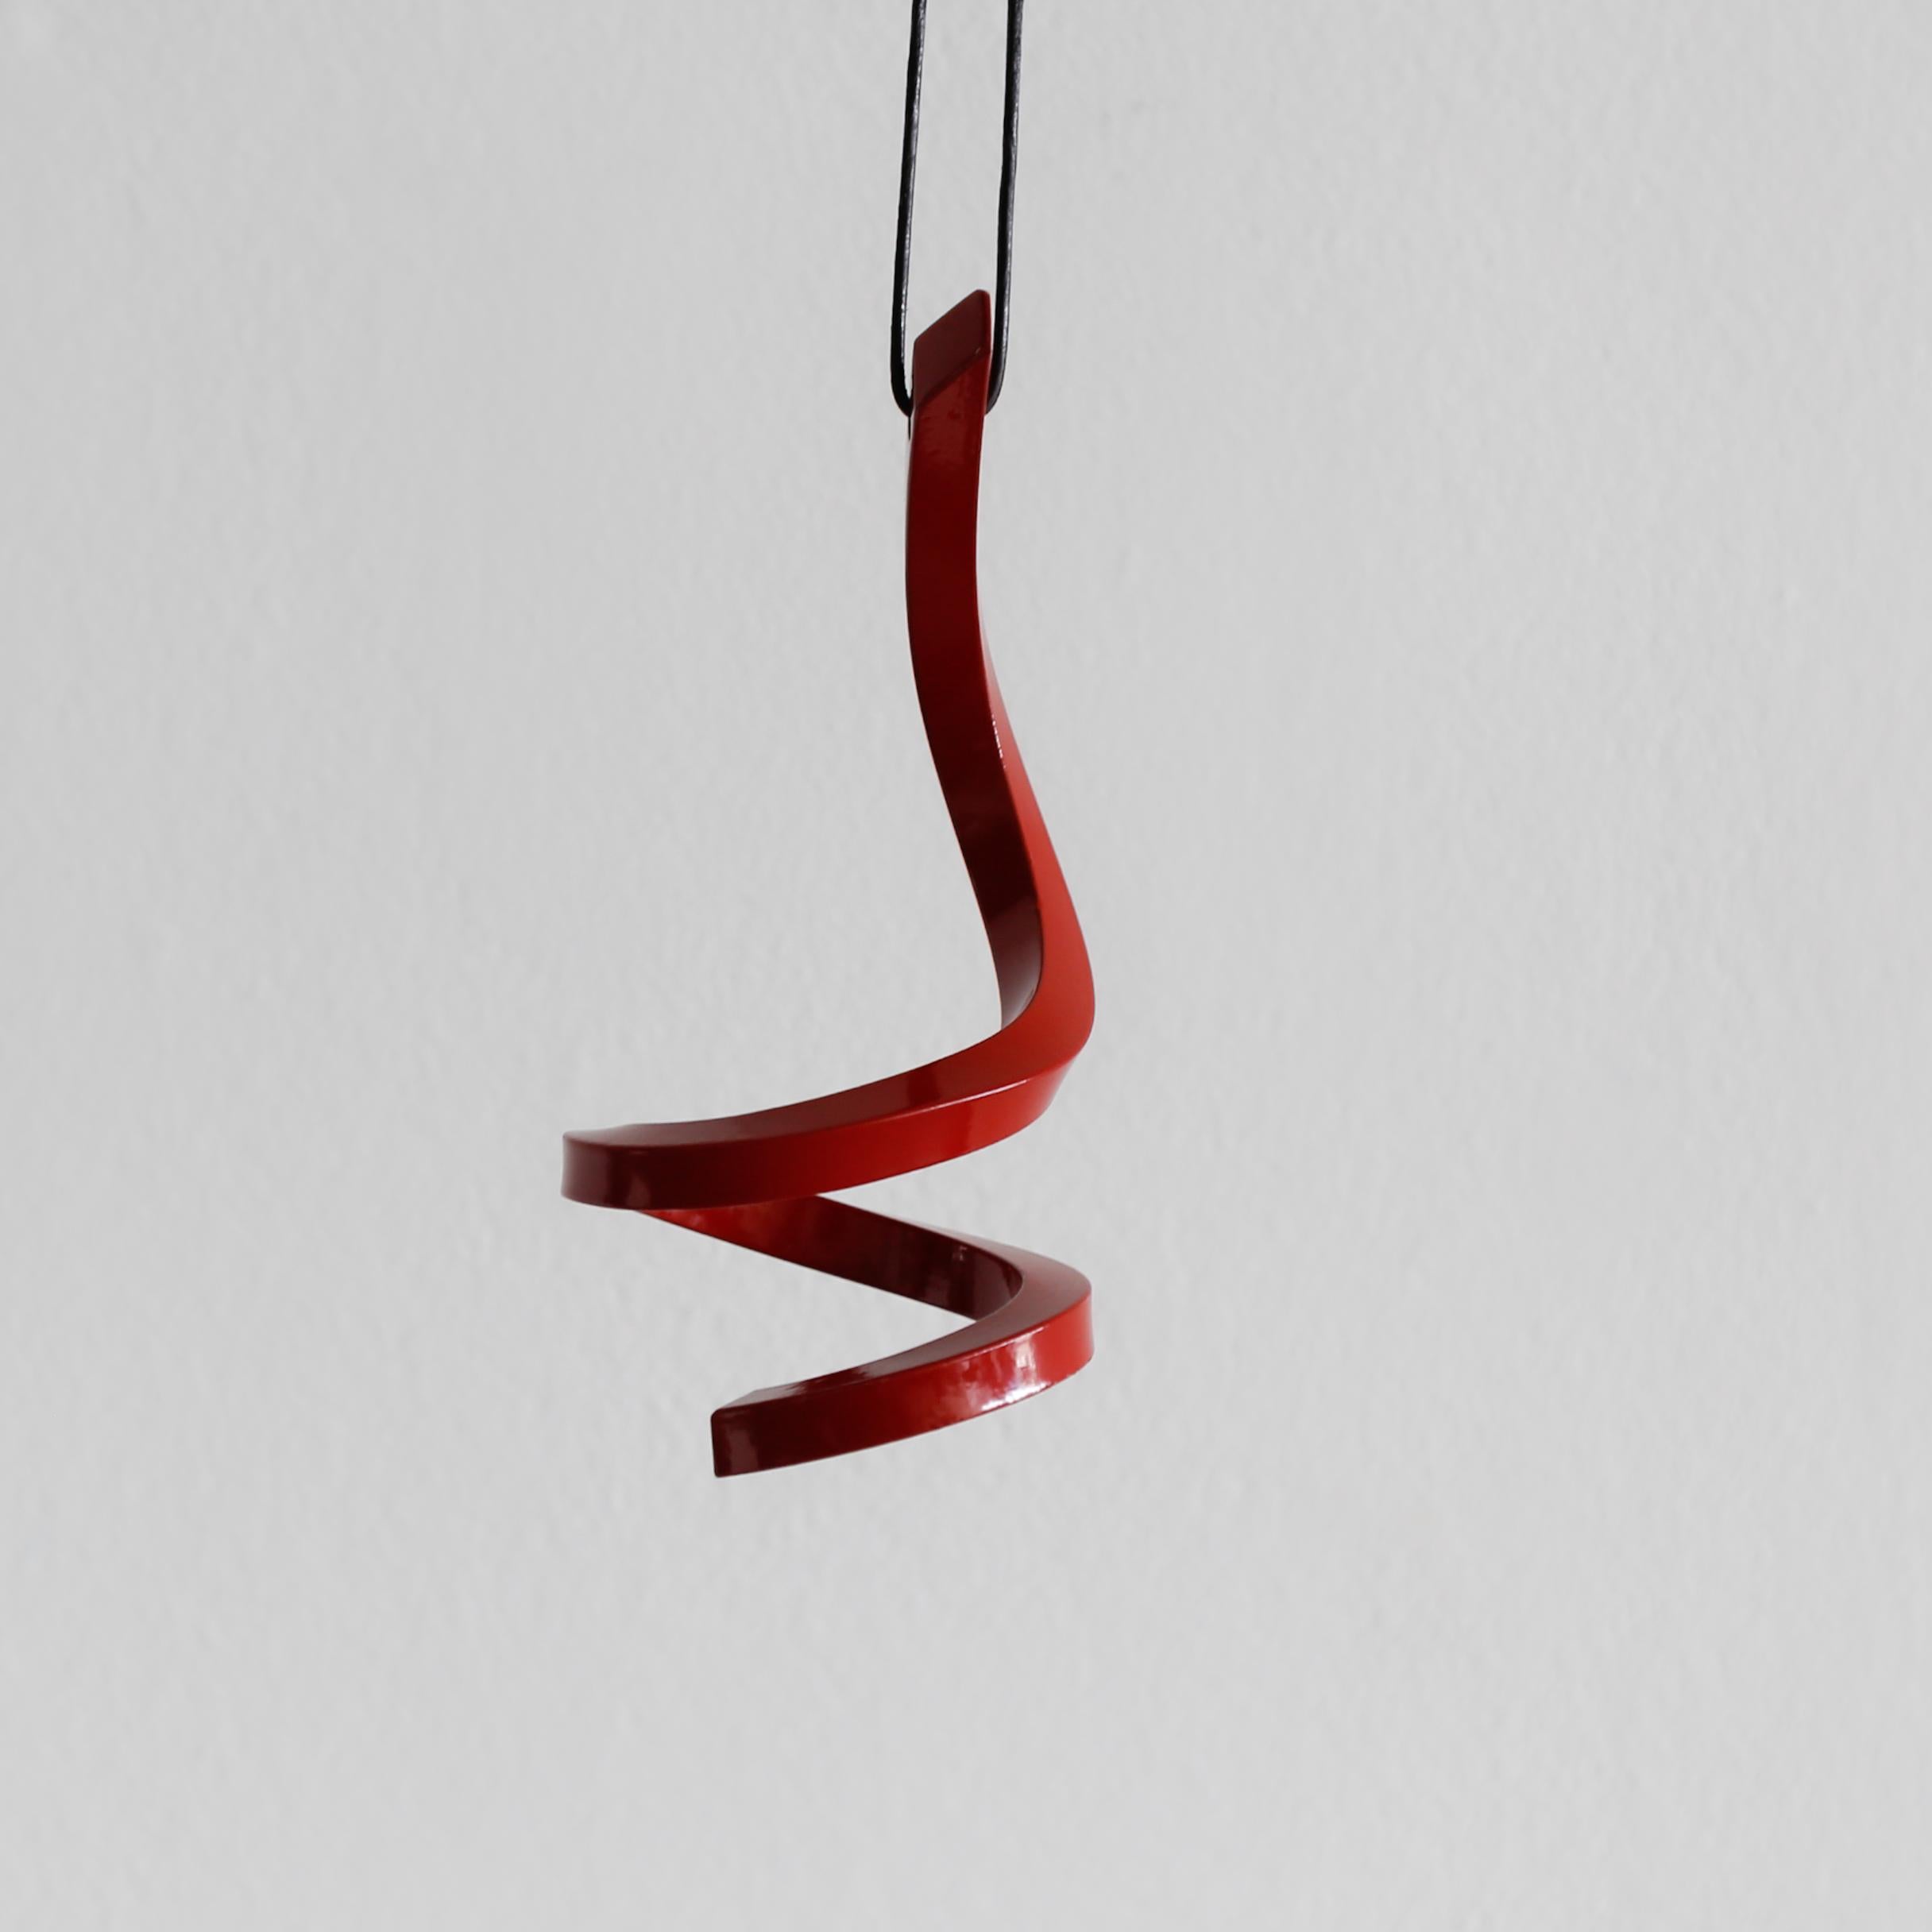 Red Ribbon 5 - Sculpture by Morgan Robinson